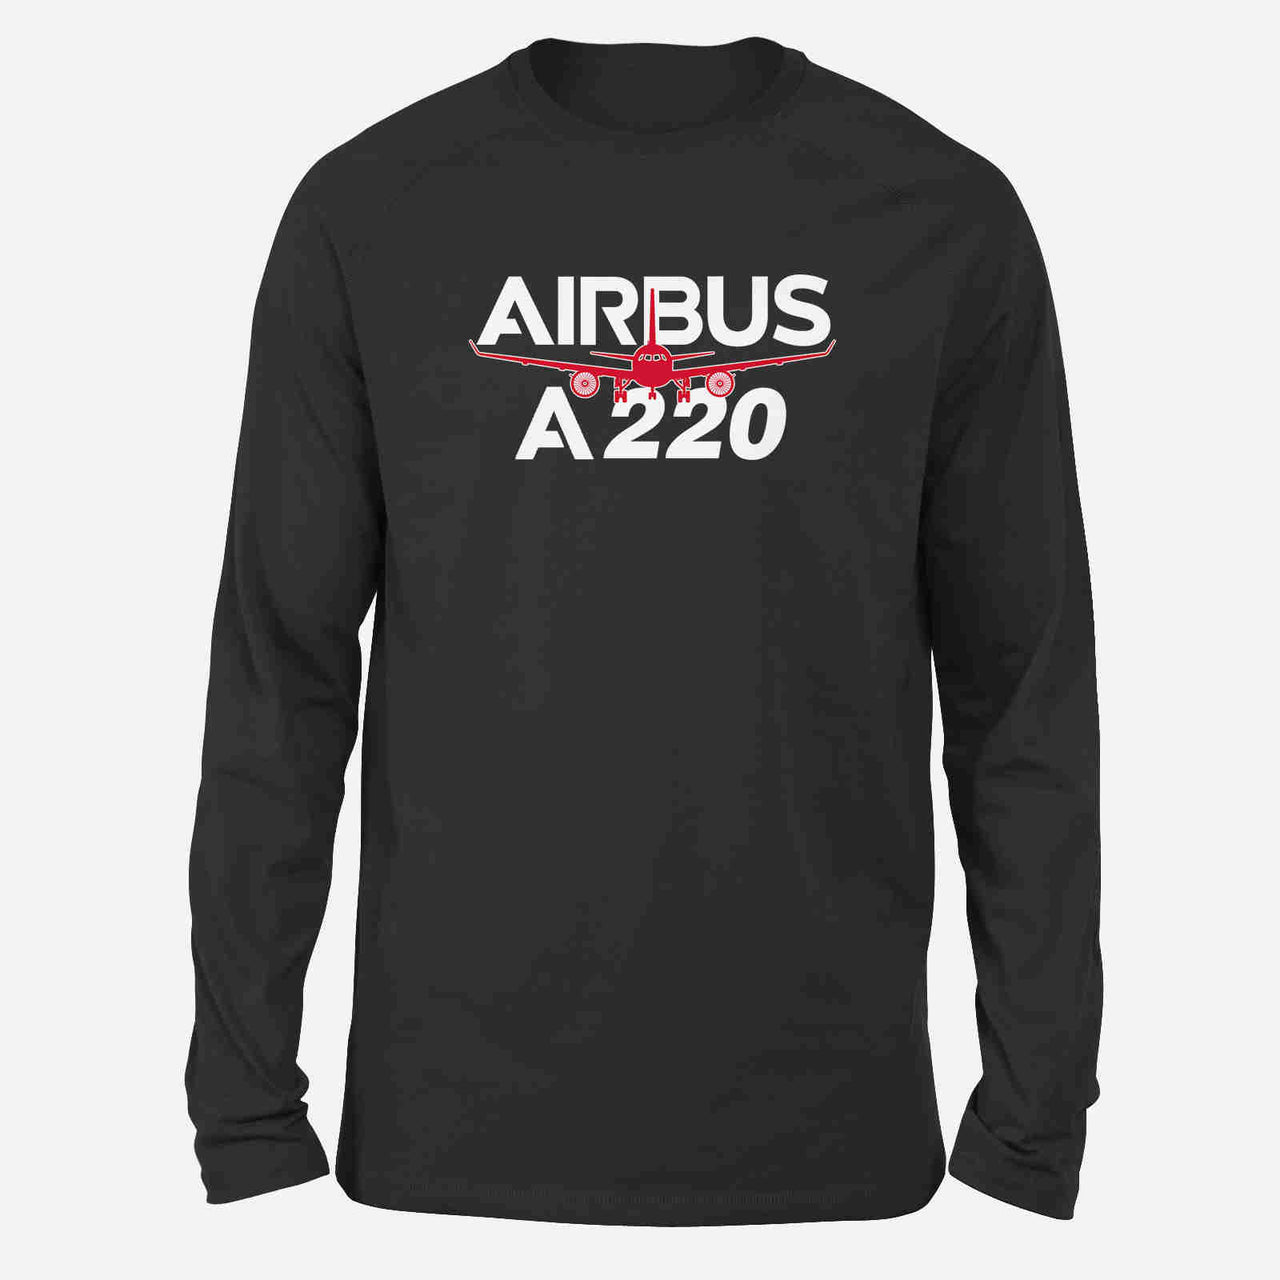 Amazing Airbus A220 Designed Long-Sleeve T-Shirts